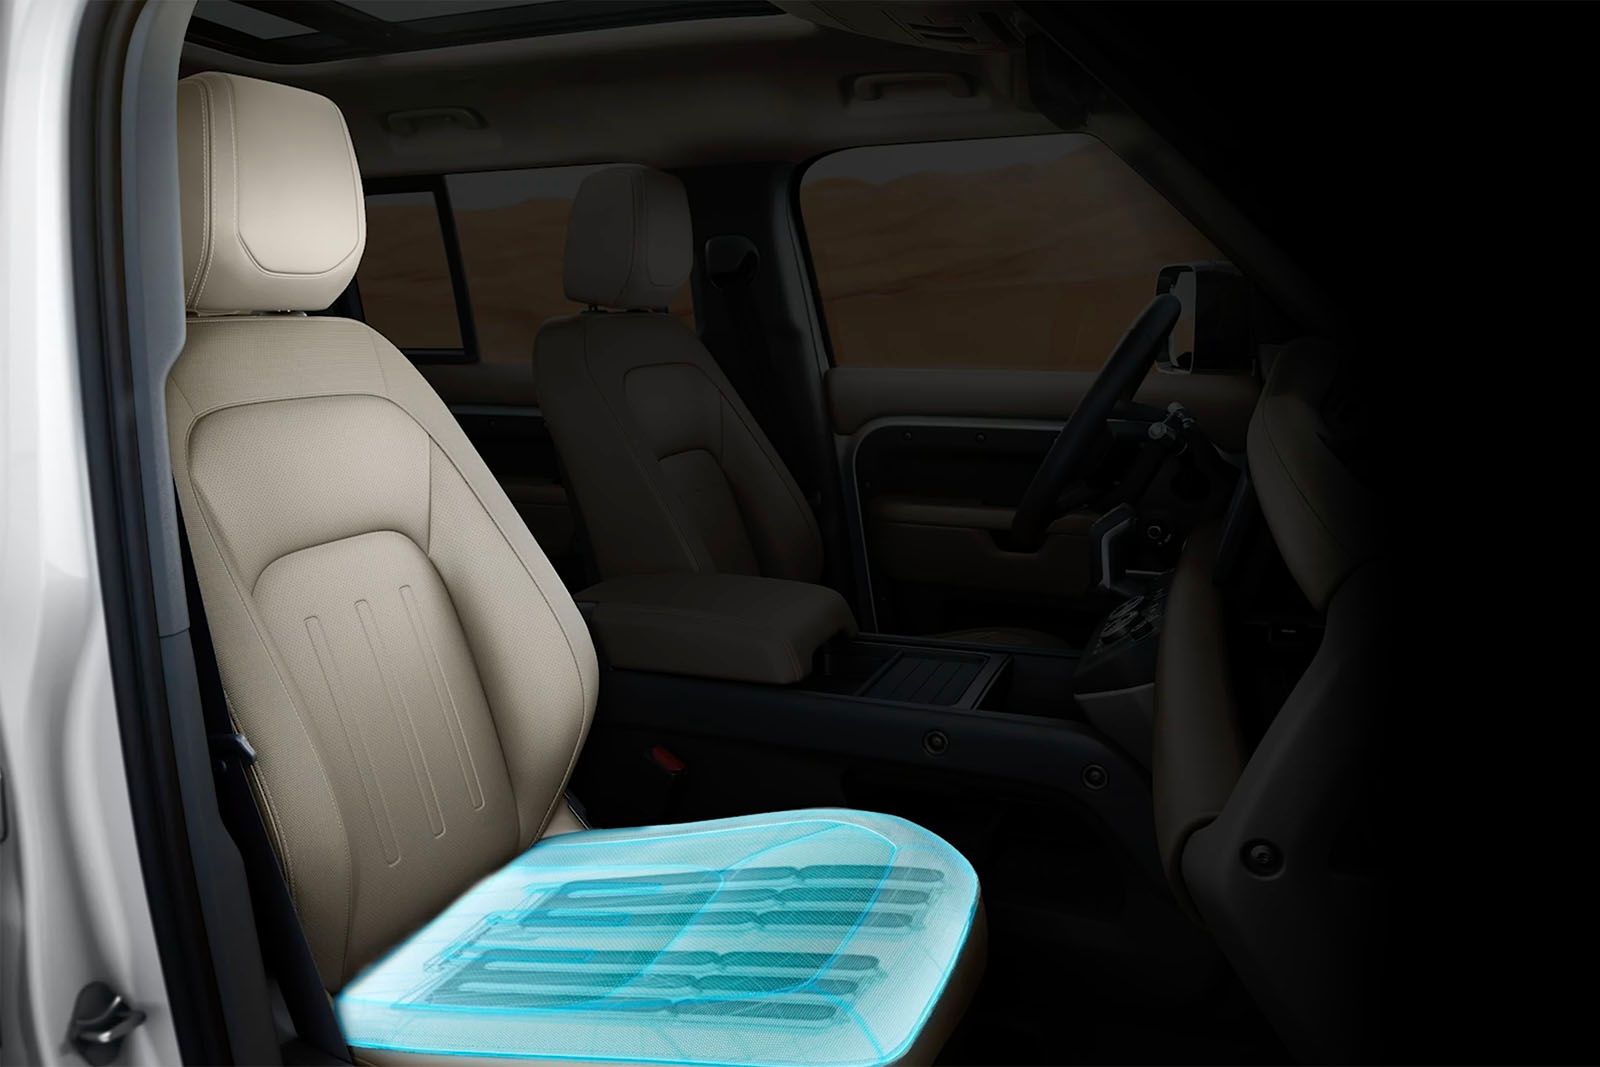 Jaguar Land Rover woking on morphable seat to make long journeys more comfortable image 1